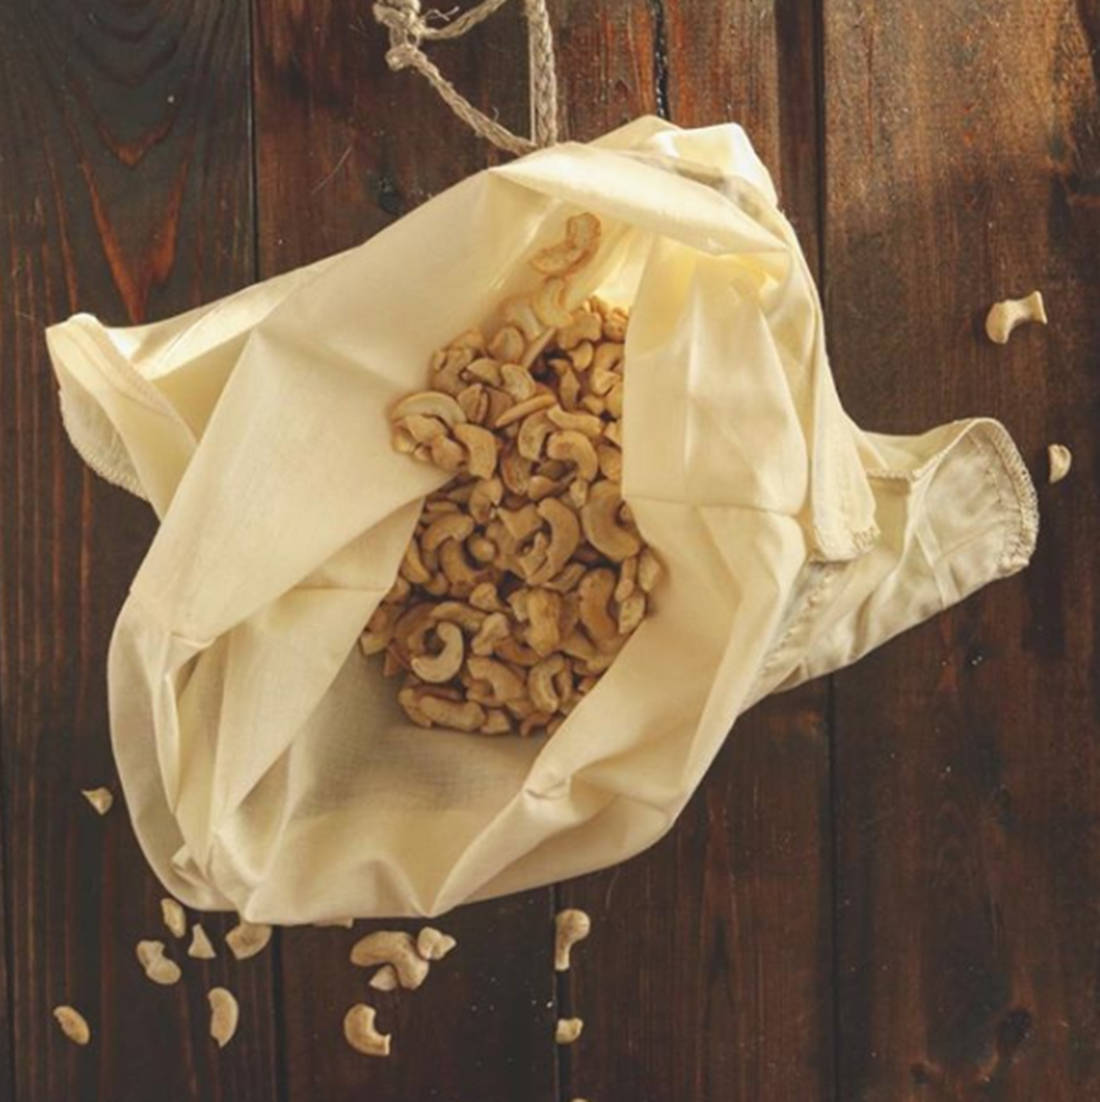 nut milk bags